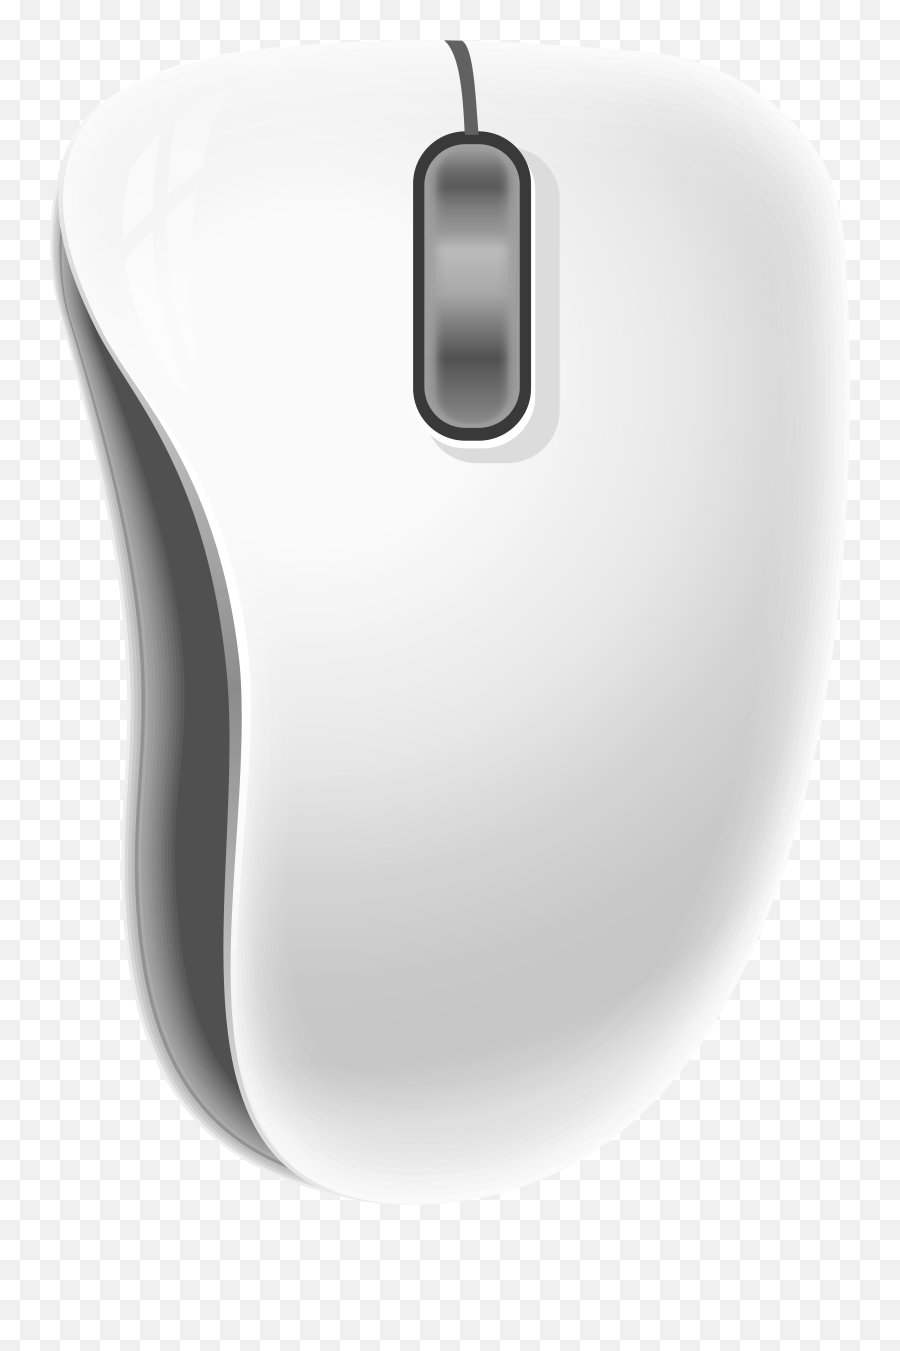 Comuter Mouse Png Clip Art - Mouse,Mouse Png